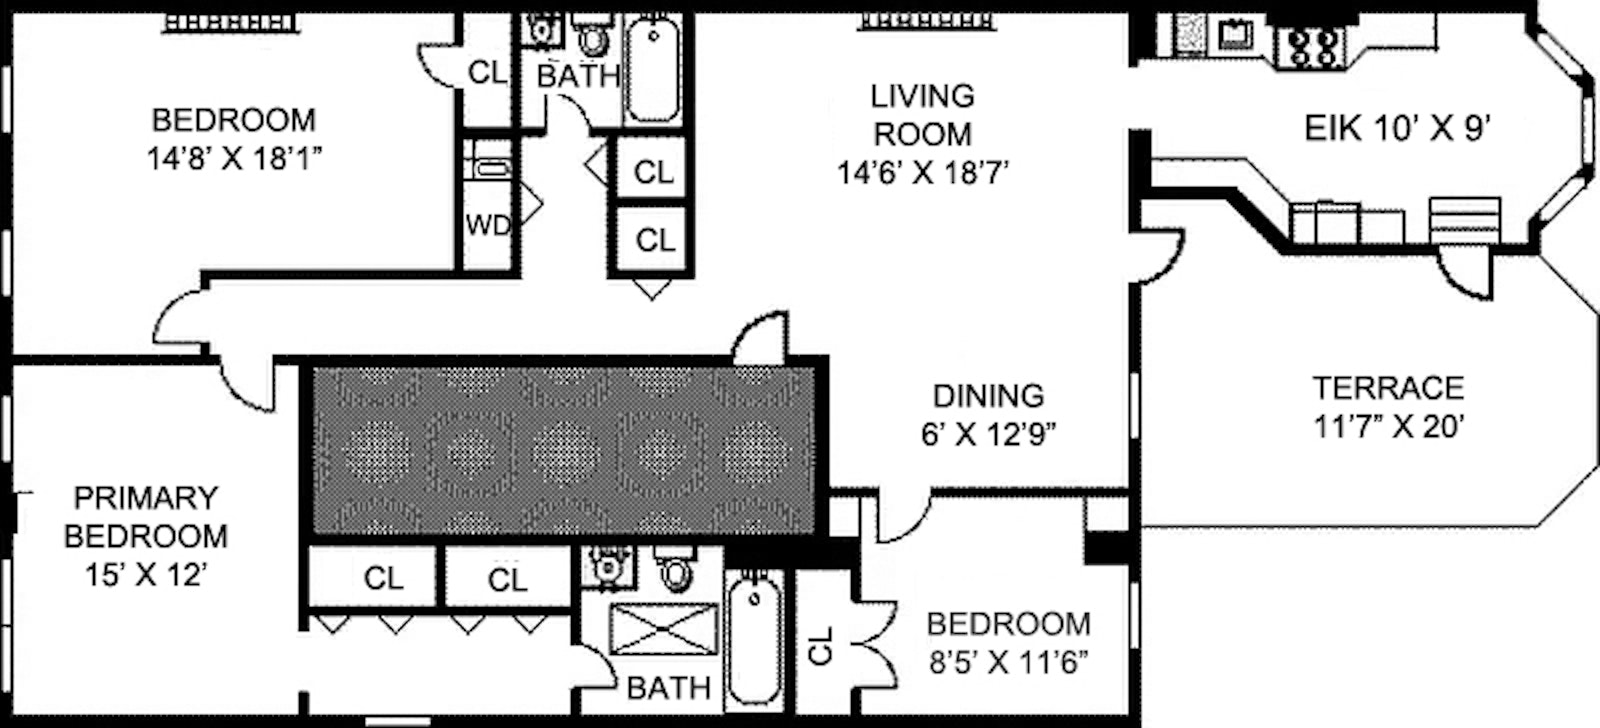 Floorplan for 37 Tompkins Place, 3